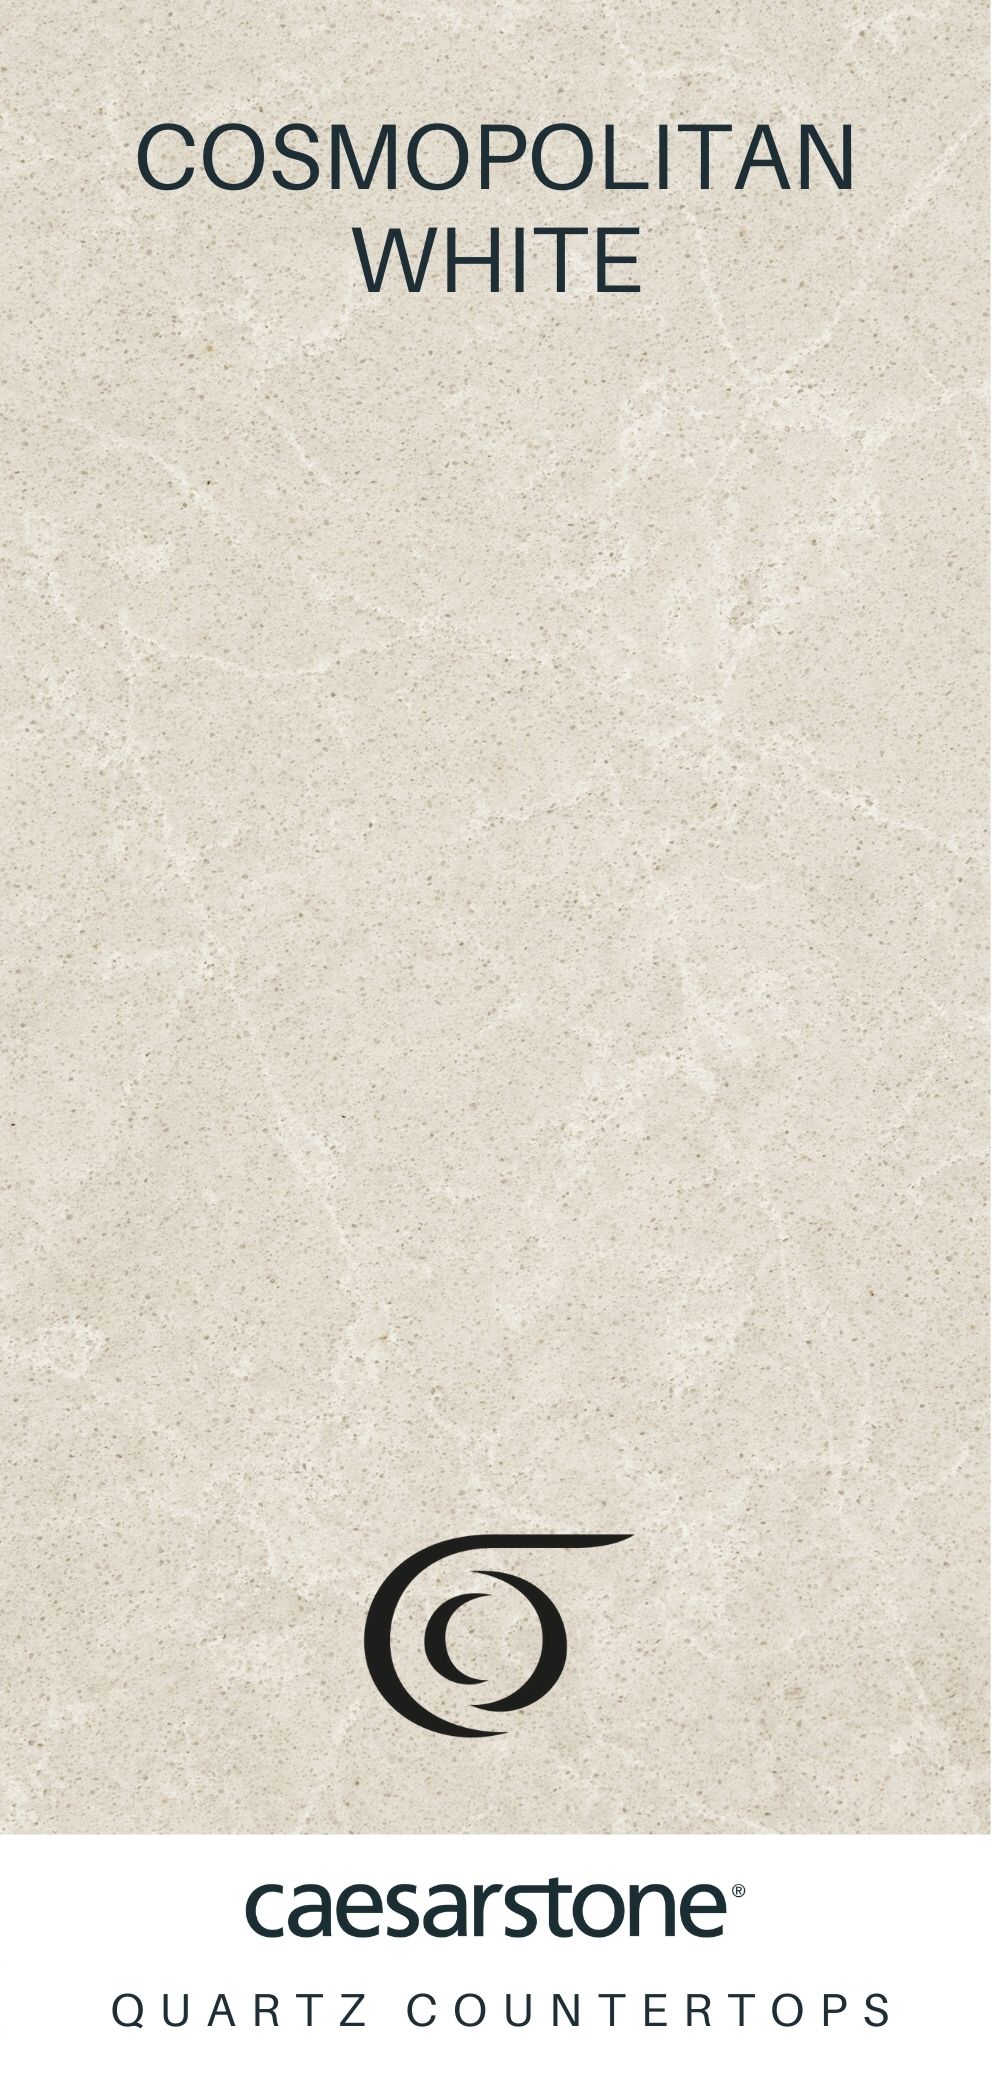 Caesarstone Quartz Countertops Cosmopolitan White